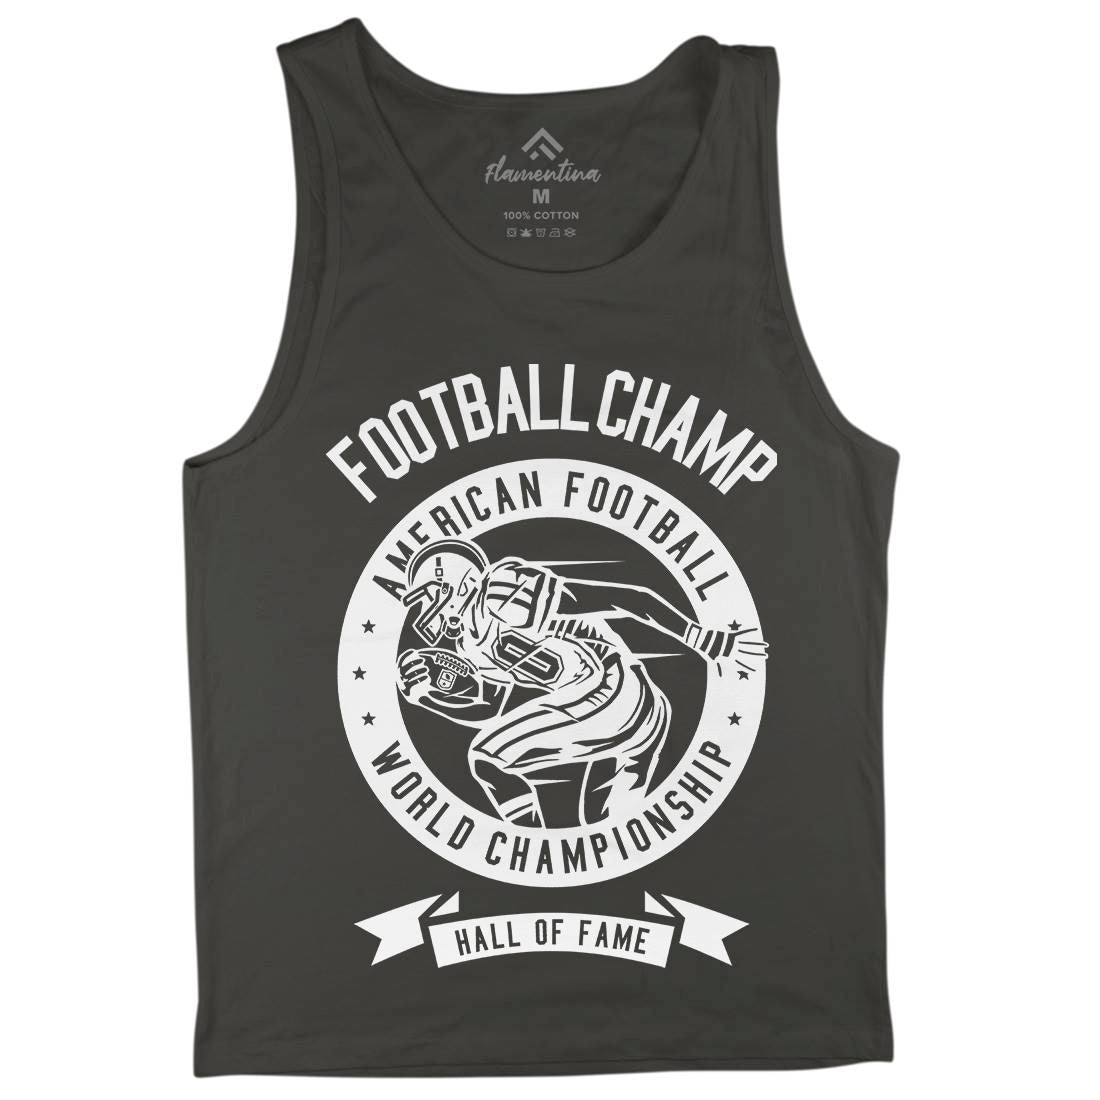 Football Champ Mens Tank Top Vest Sport B541